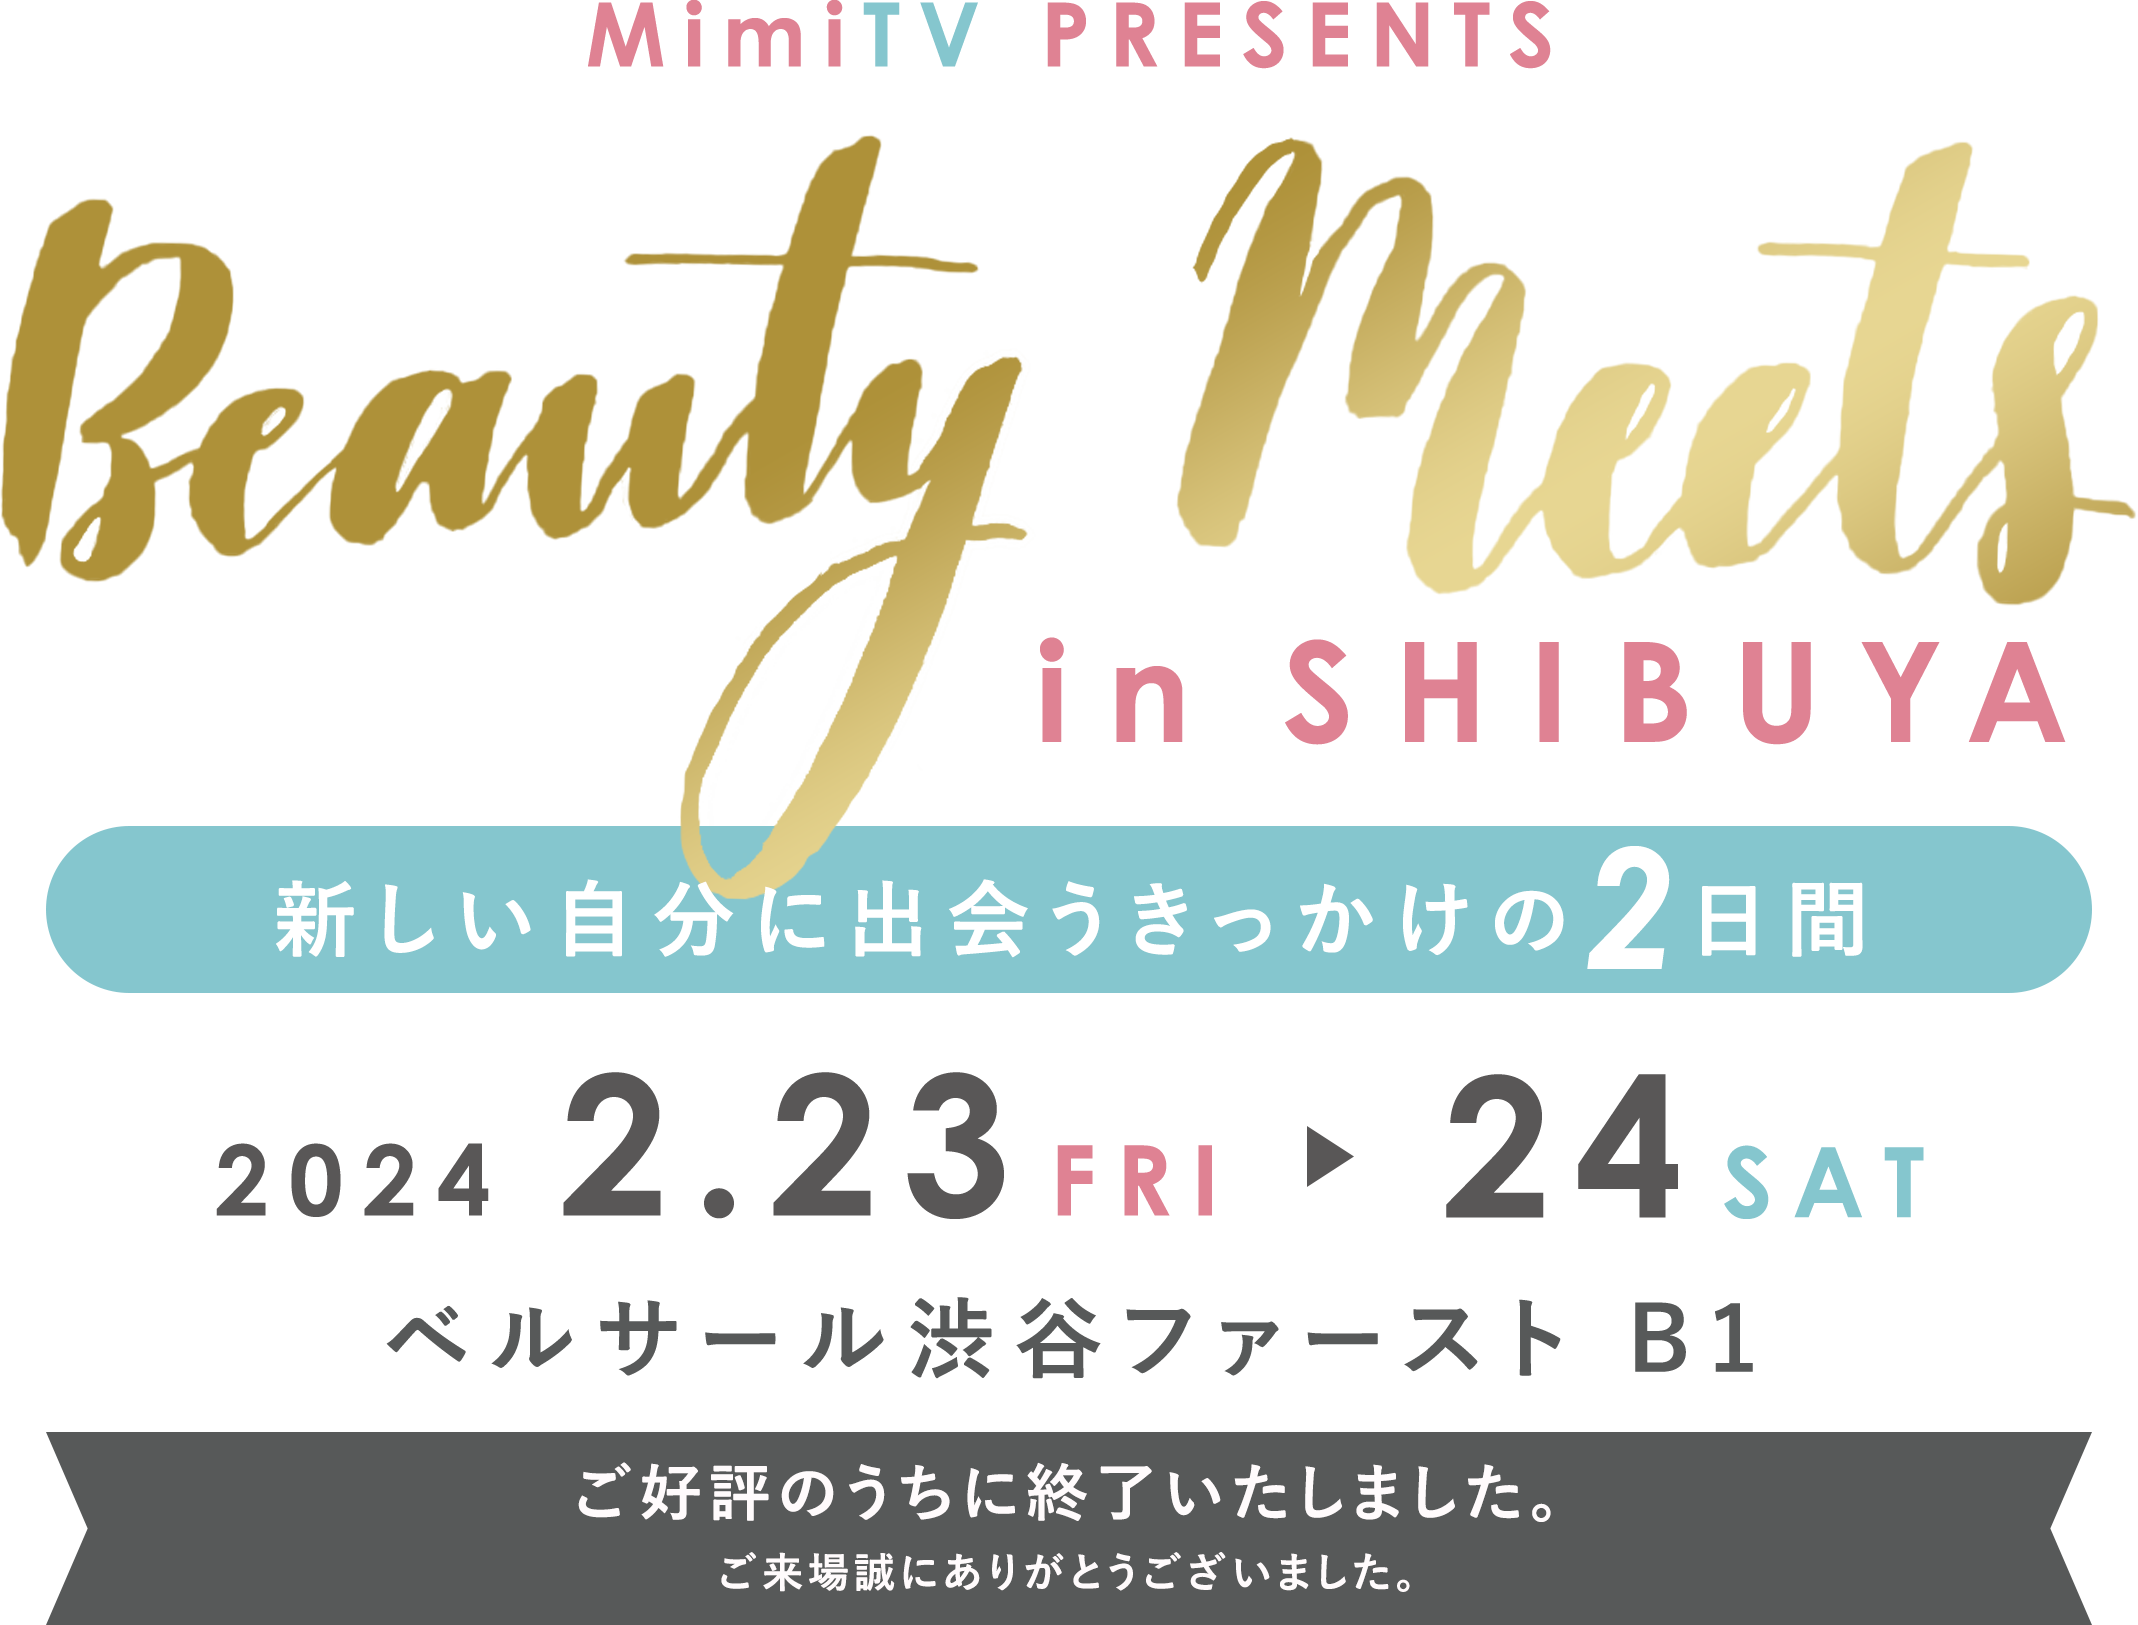 MimiTV PRESENTS Beauty Meets in SHIBUYA 新しい自分に出会うきっかけの2日間 2024.2.23 FRI ▶︎ 24 SAT ベルサール渋谷ファースト B1 応募受付:2024 1.12 FRI 〜